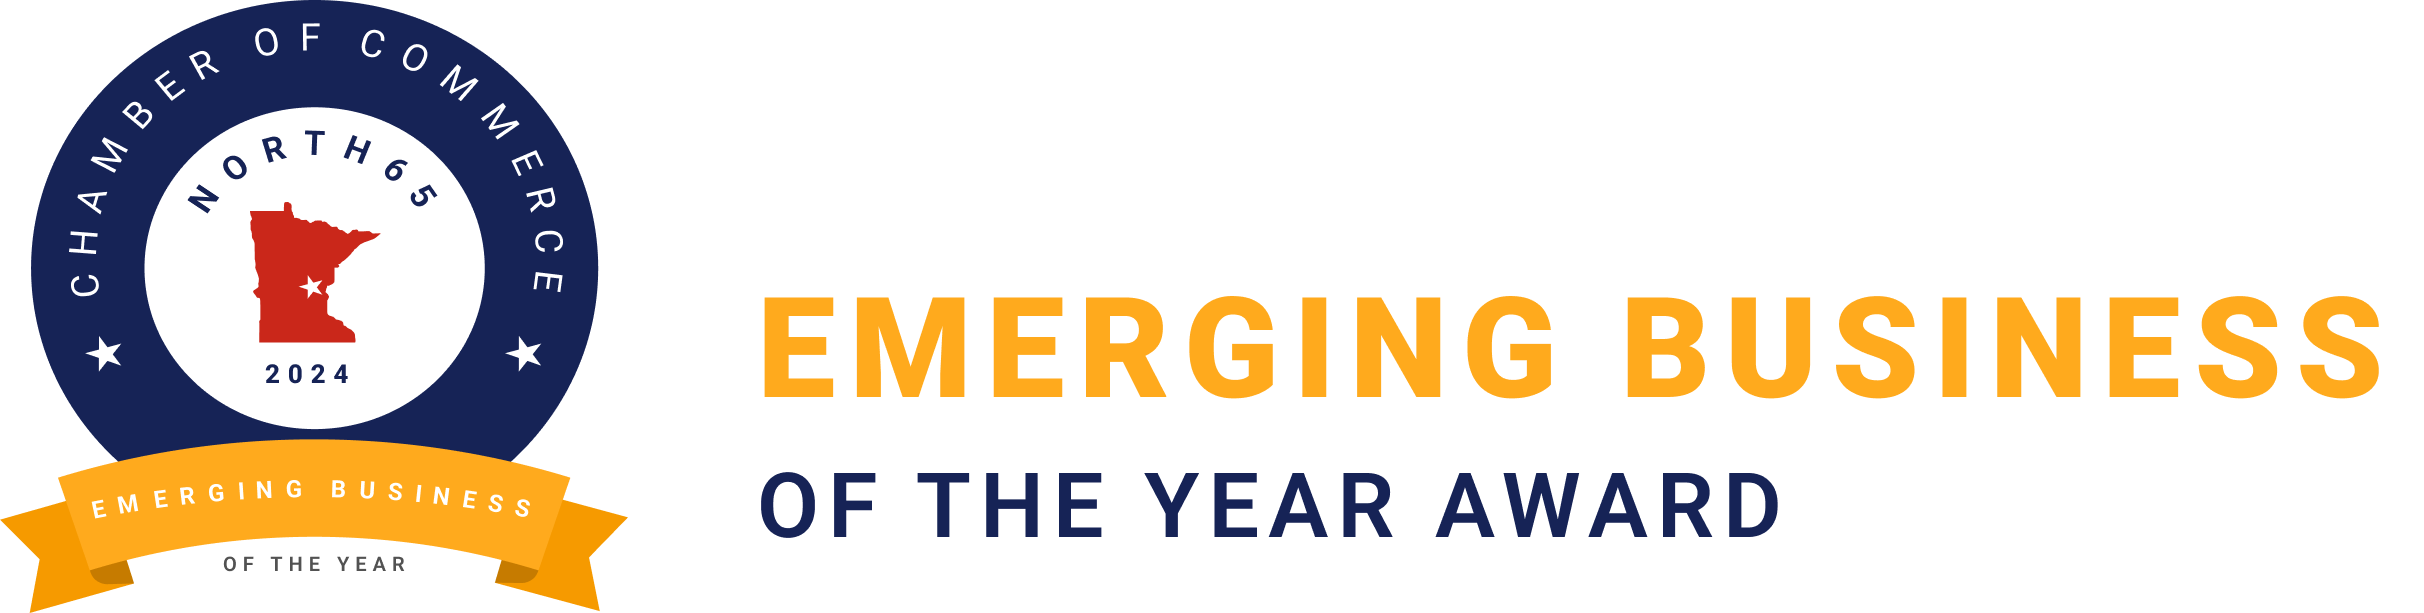 Emerging Businss Award 2024 Image